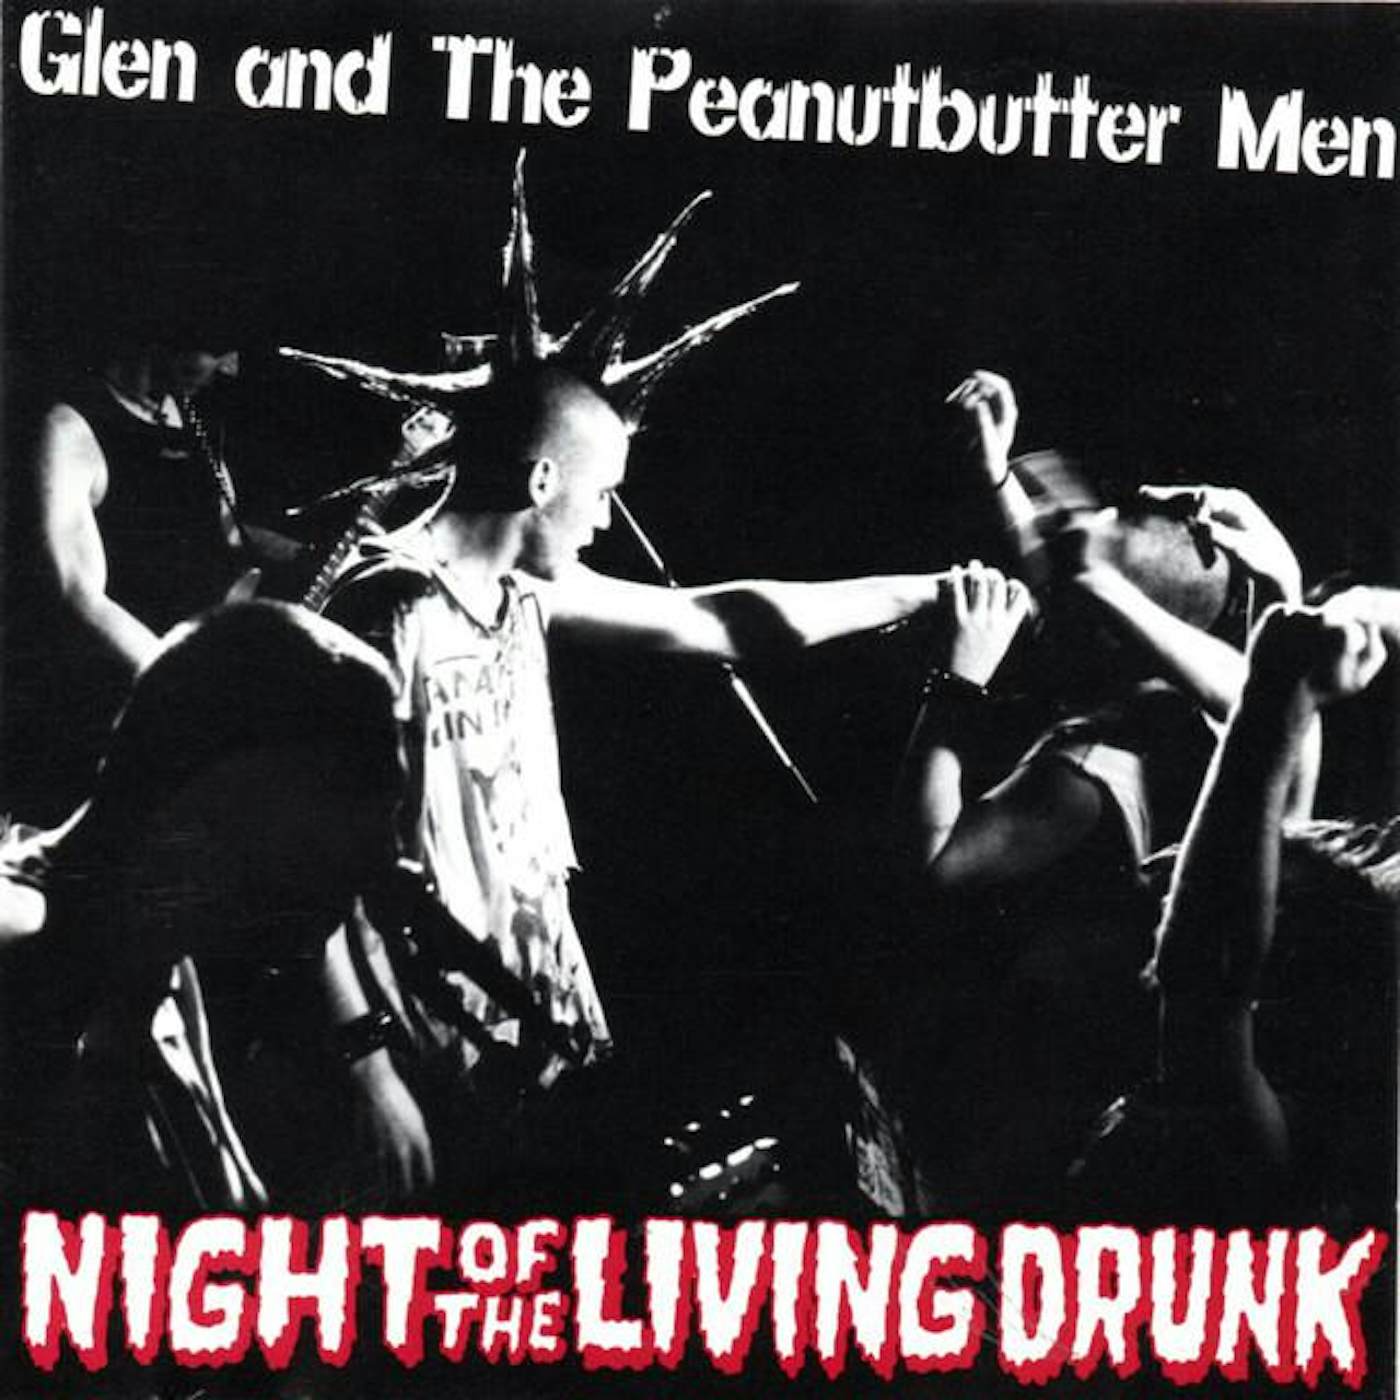 Glen and the Peanutbutter Men